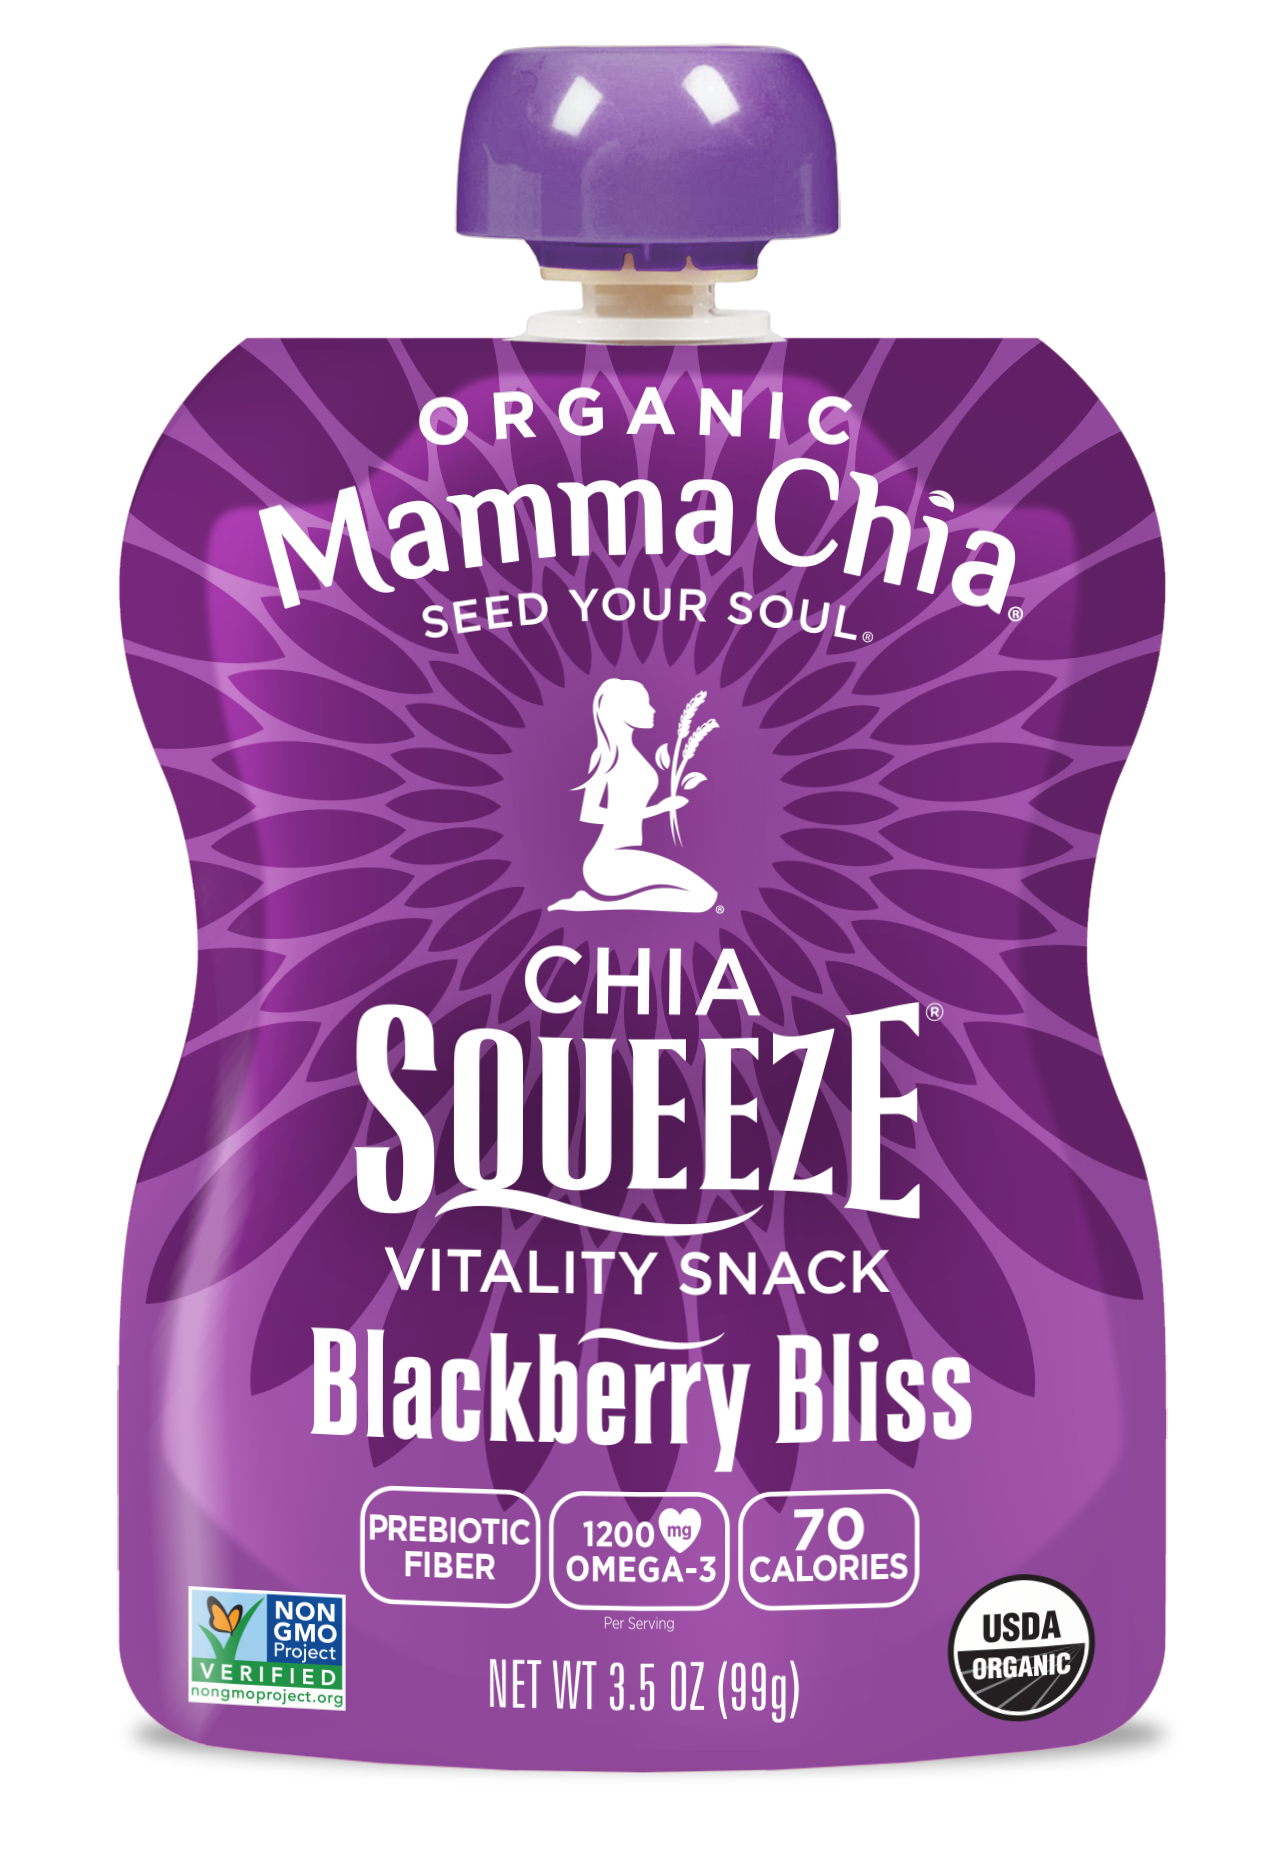 Mamma Chia Blackberry Bliss Organic Chia Squeeze 2 innerpacks per case 28.0 oz